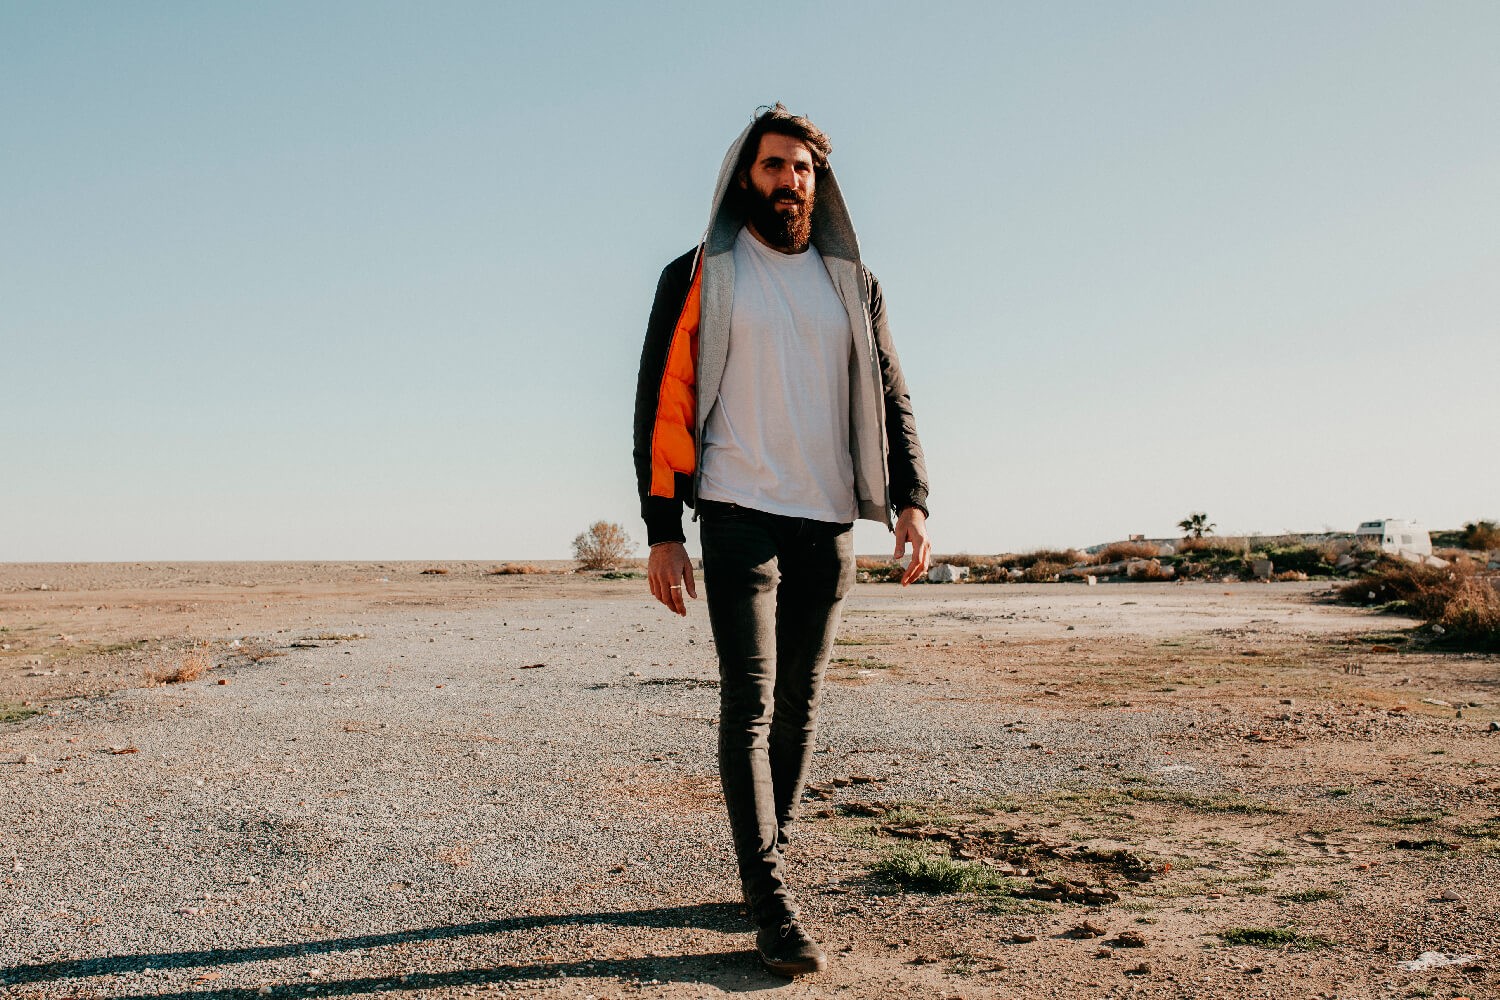 Man walking outside alone through a desert community